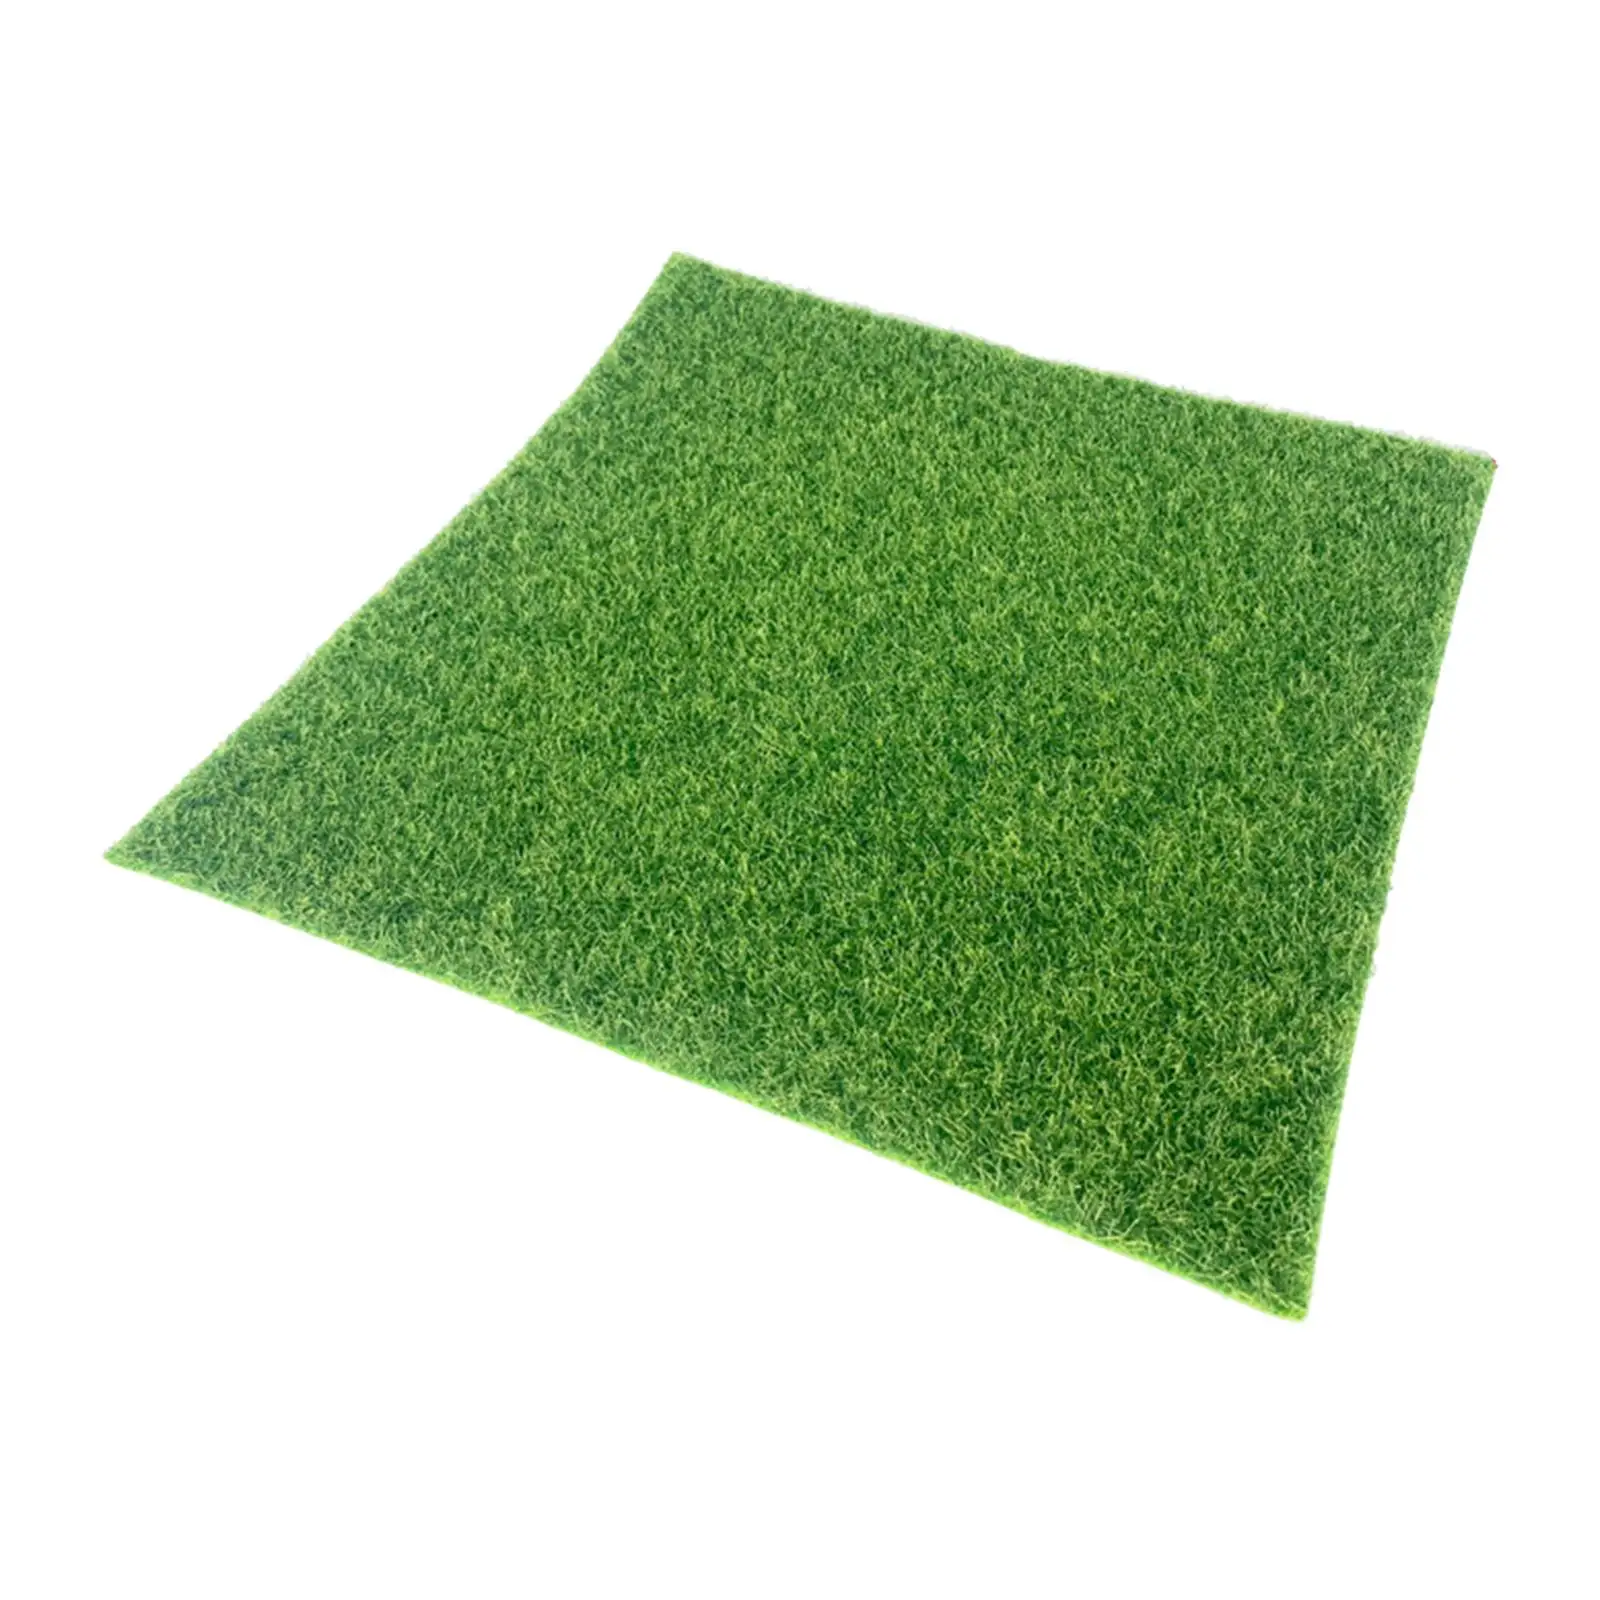 15x15cm Grass Mat Dog Training Area Artificial Carpet Turf Lawn for Patio Floor Balcony DIY Micro Landscape Indoor